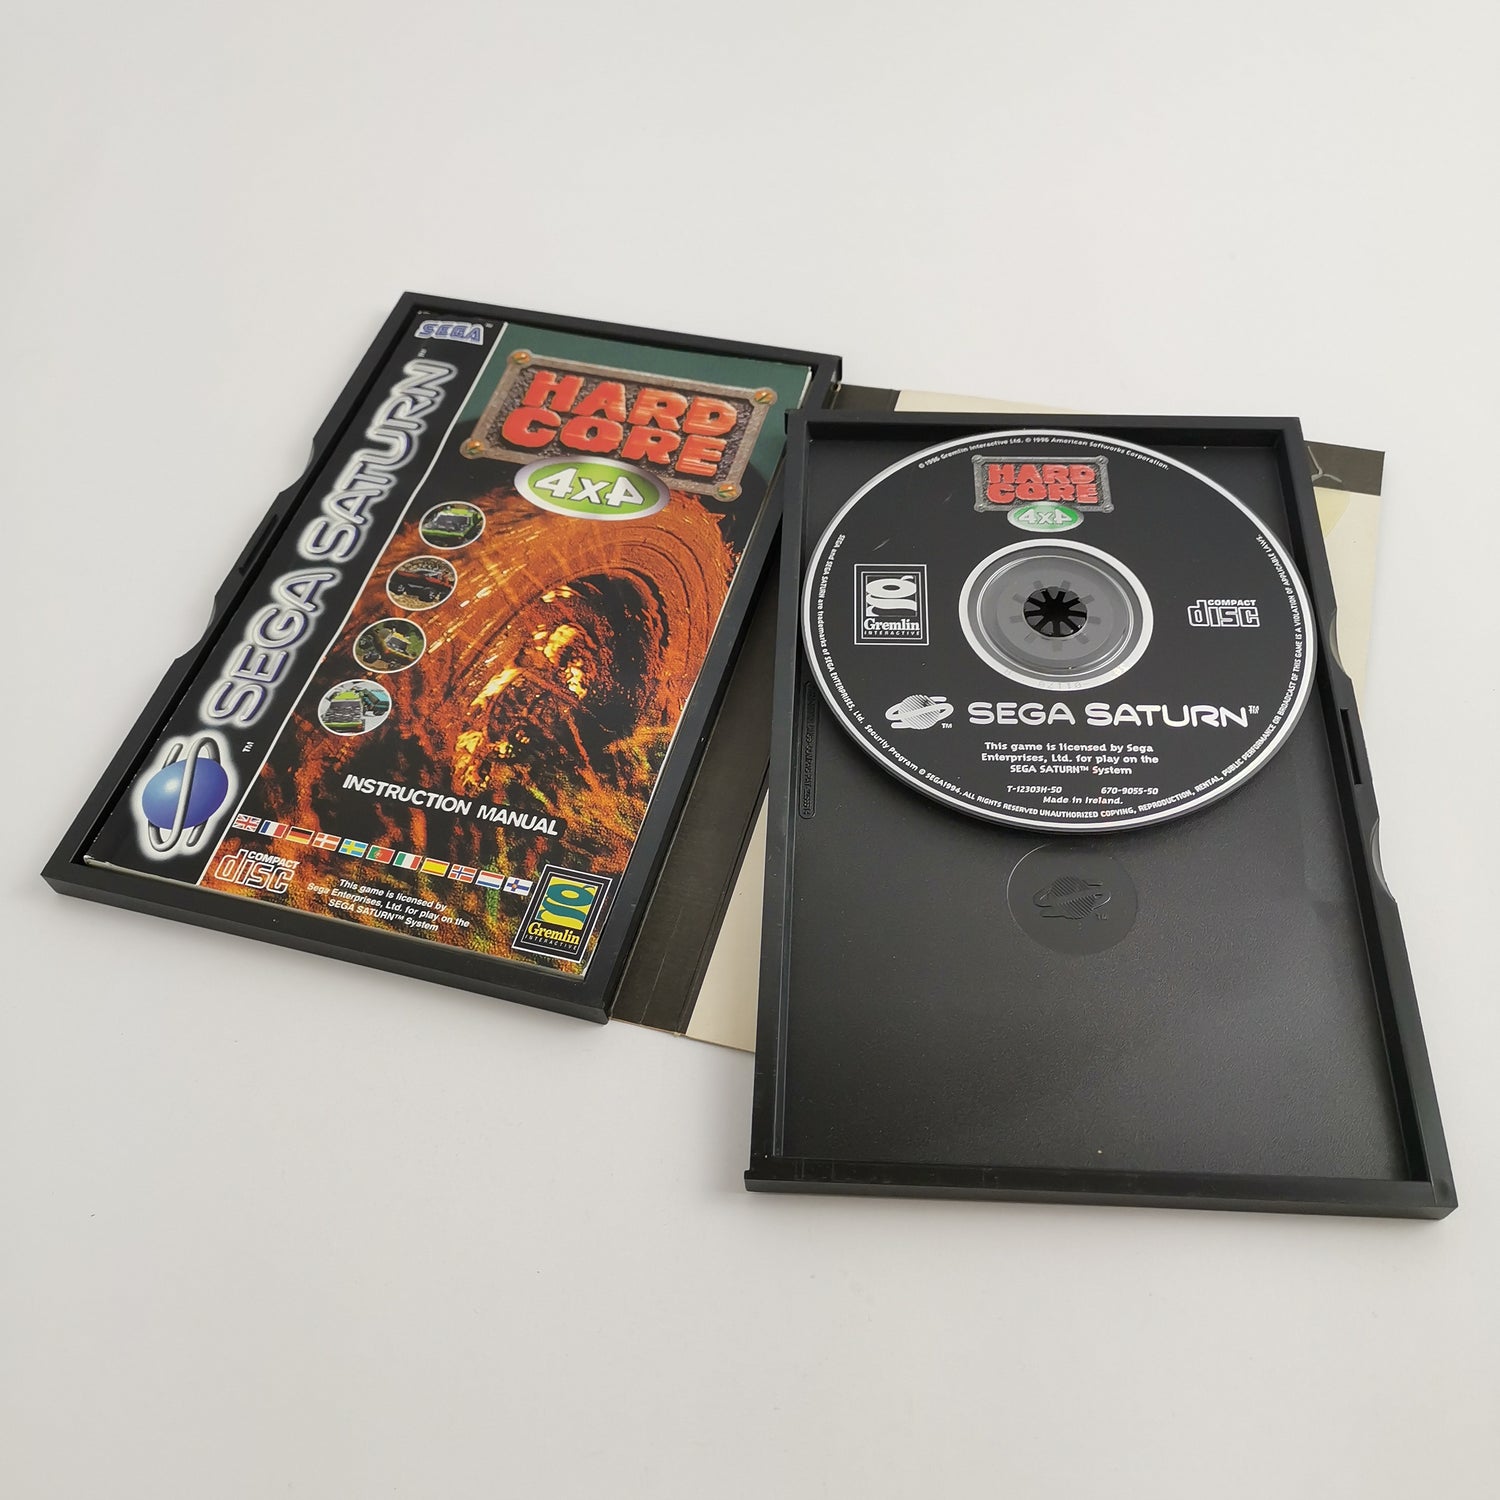 Sega Saturn Game: Hardcore 4x4 | Original packaging PAL version